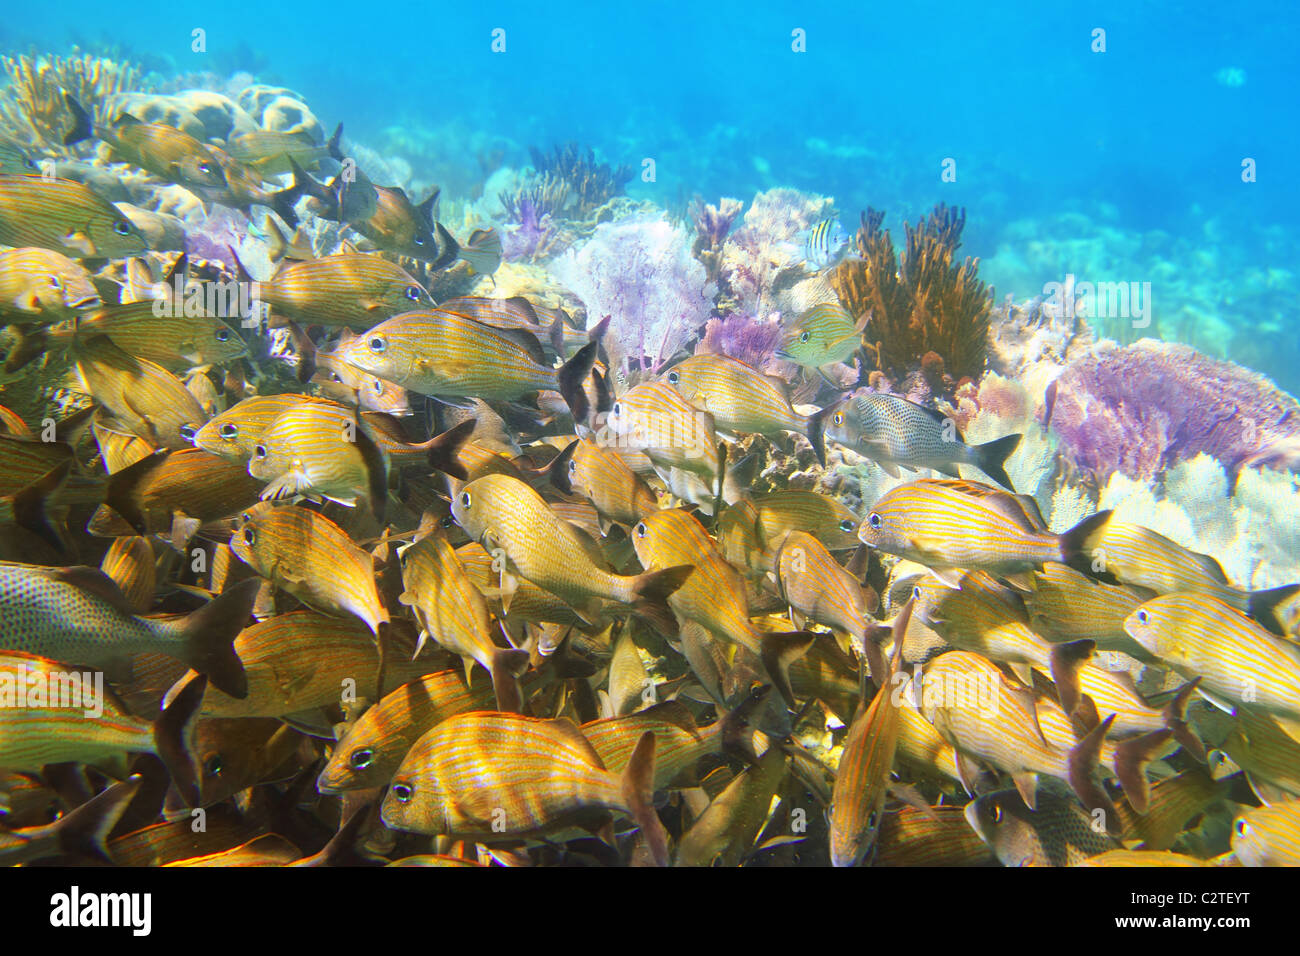 coral caribbean reef Mayan Riviera Grunt fish yellow blue stripes Stock Photo